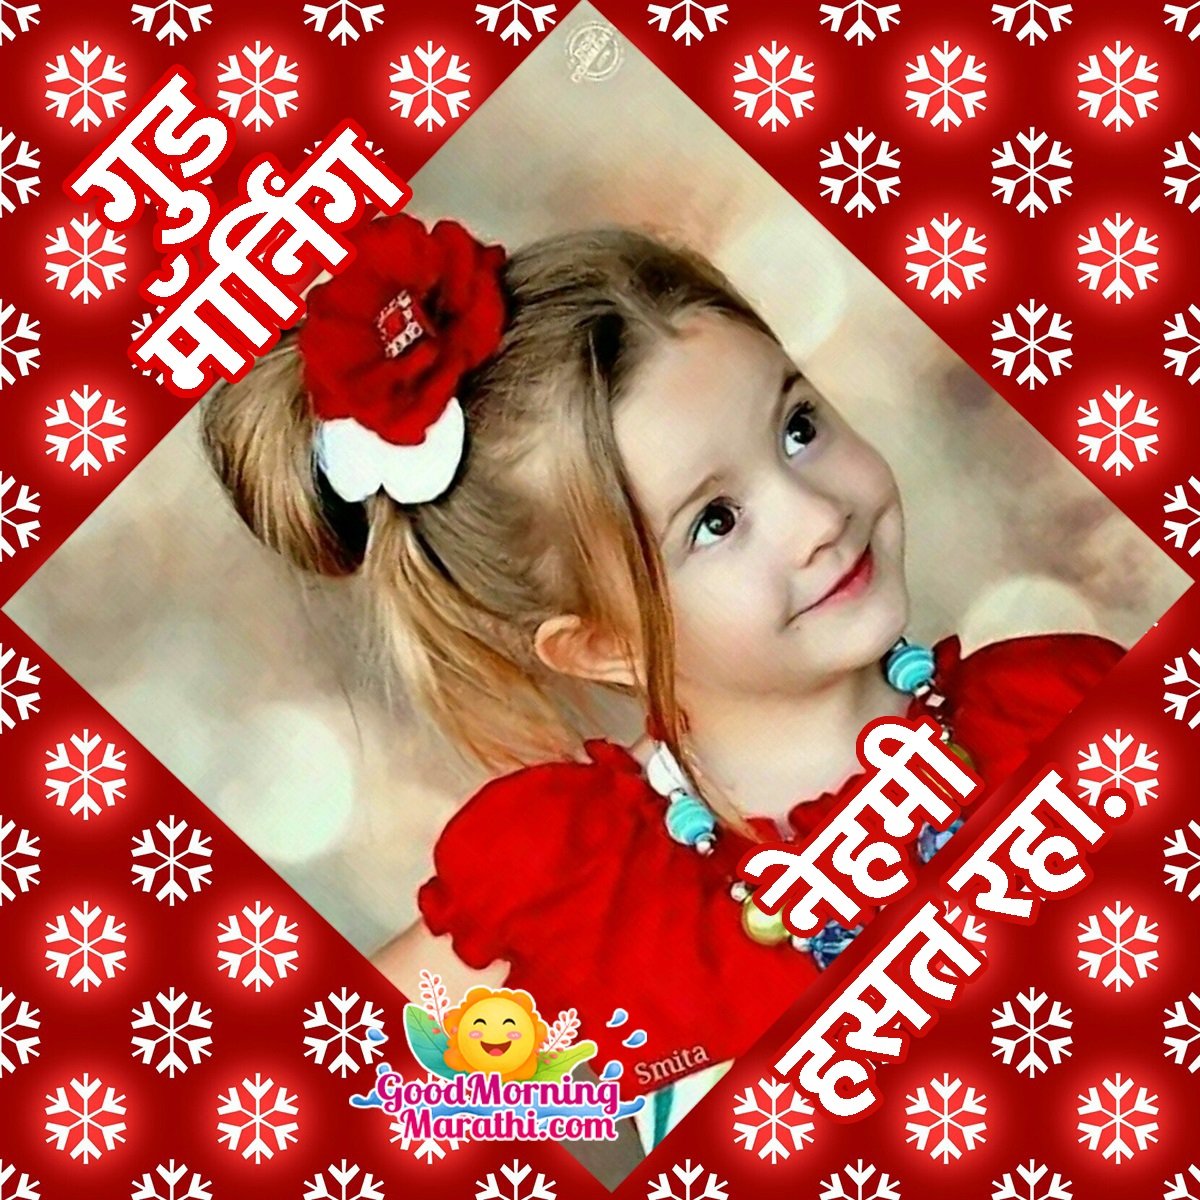 Good Morning Marathi Baby Images - Good Morning Wishes & Images In ...